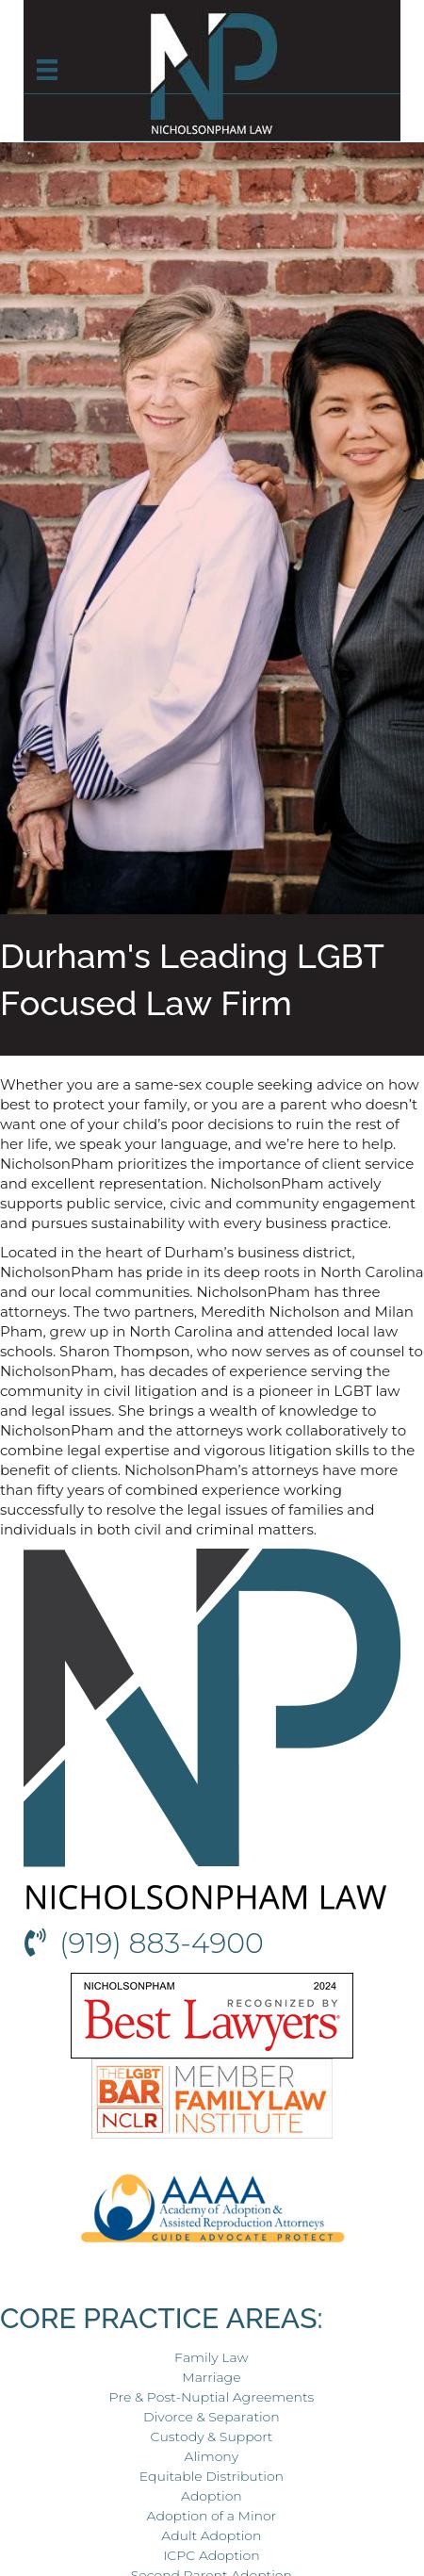 NicholsonPham | Attorneys at Law - Durham NC Lawyers